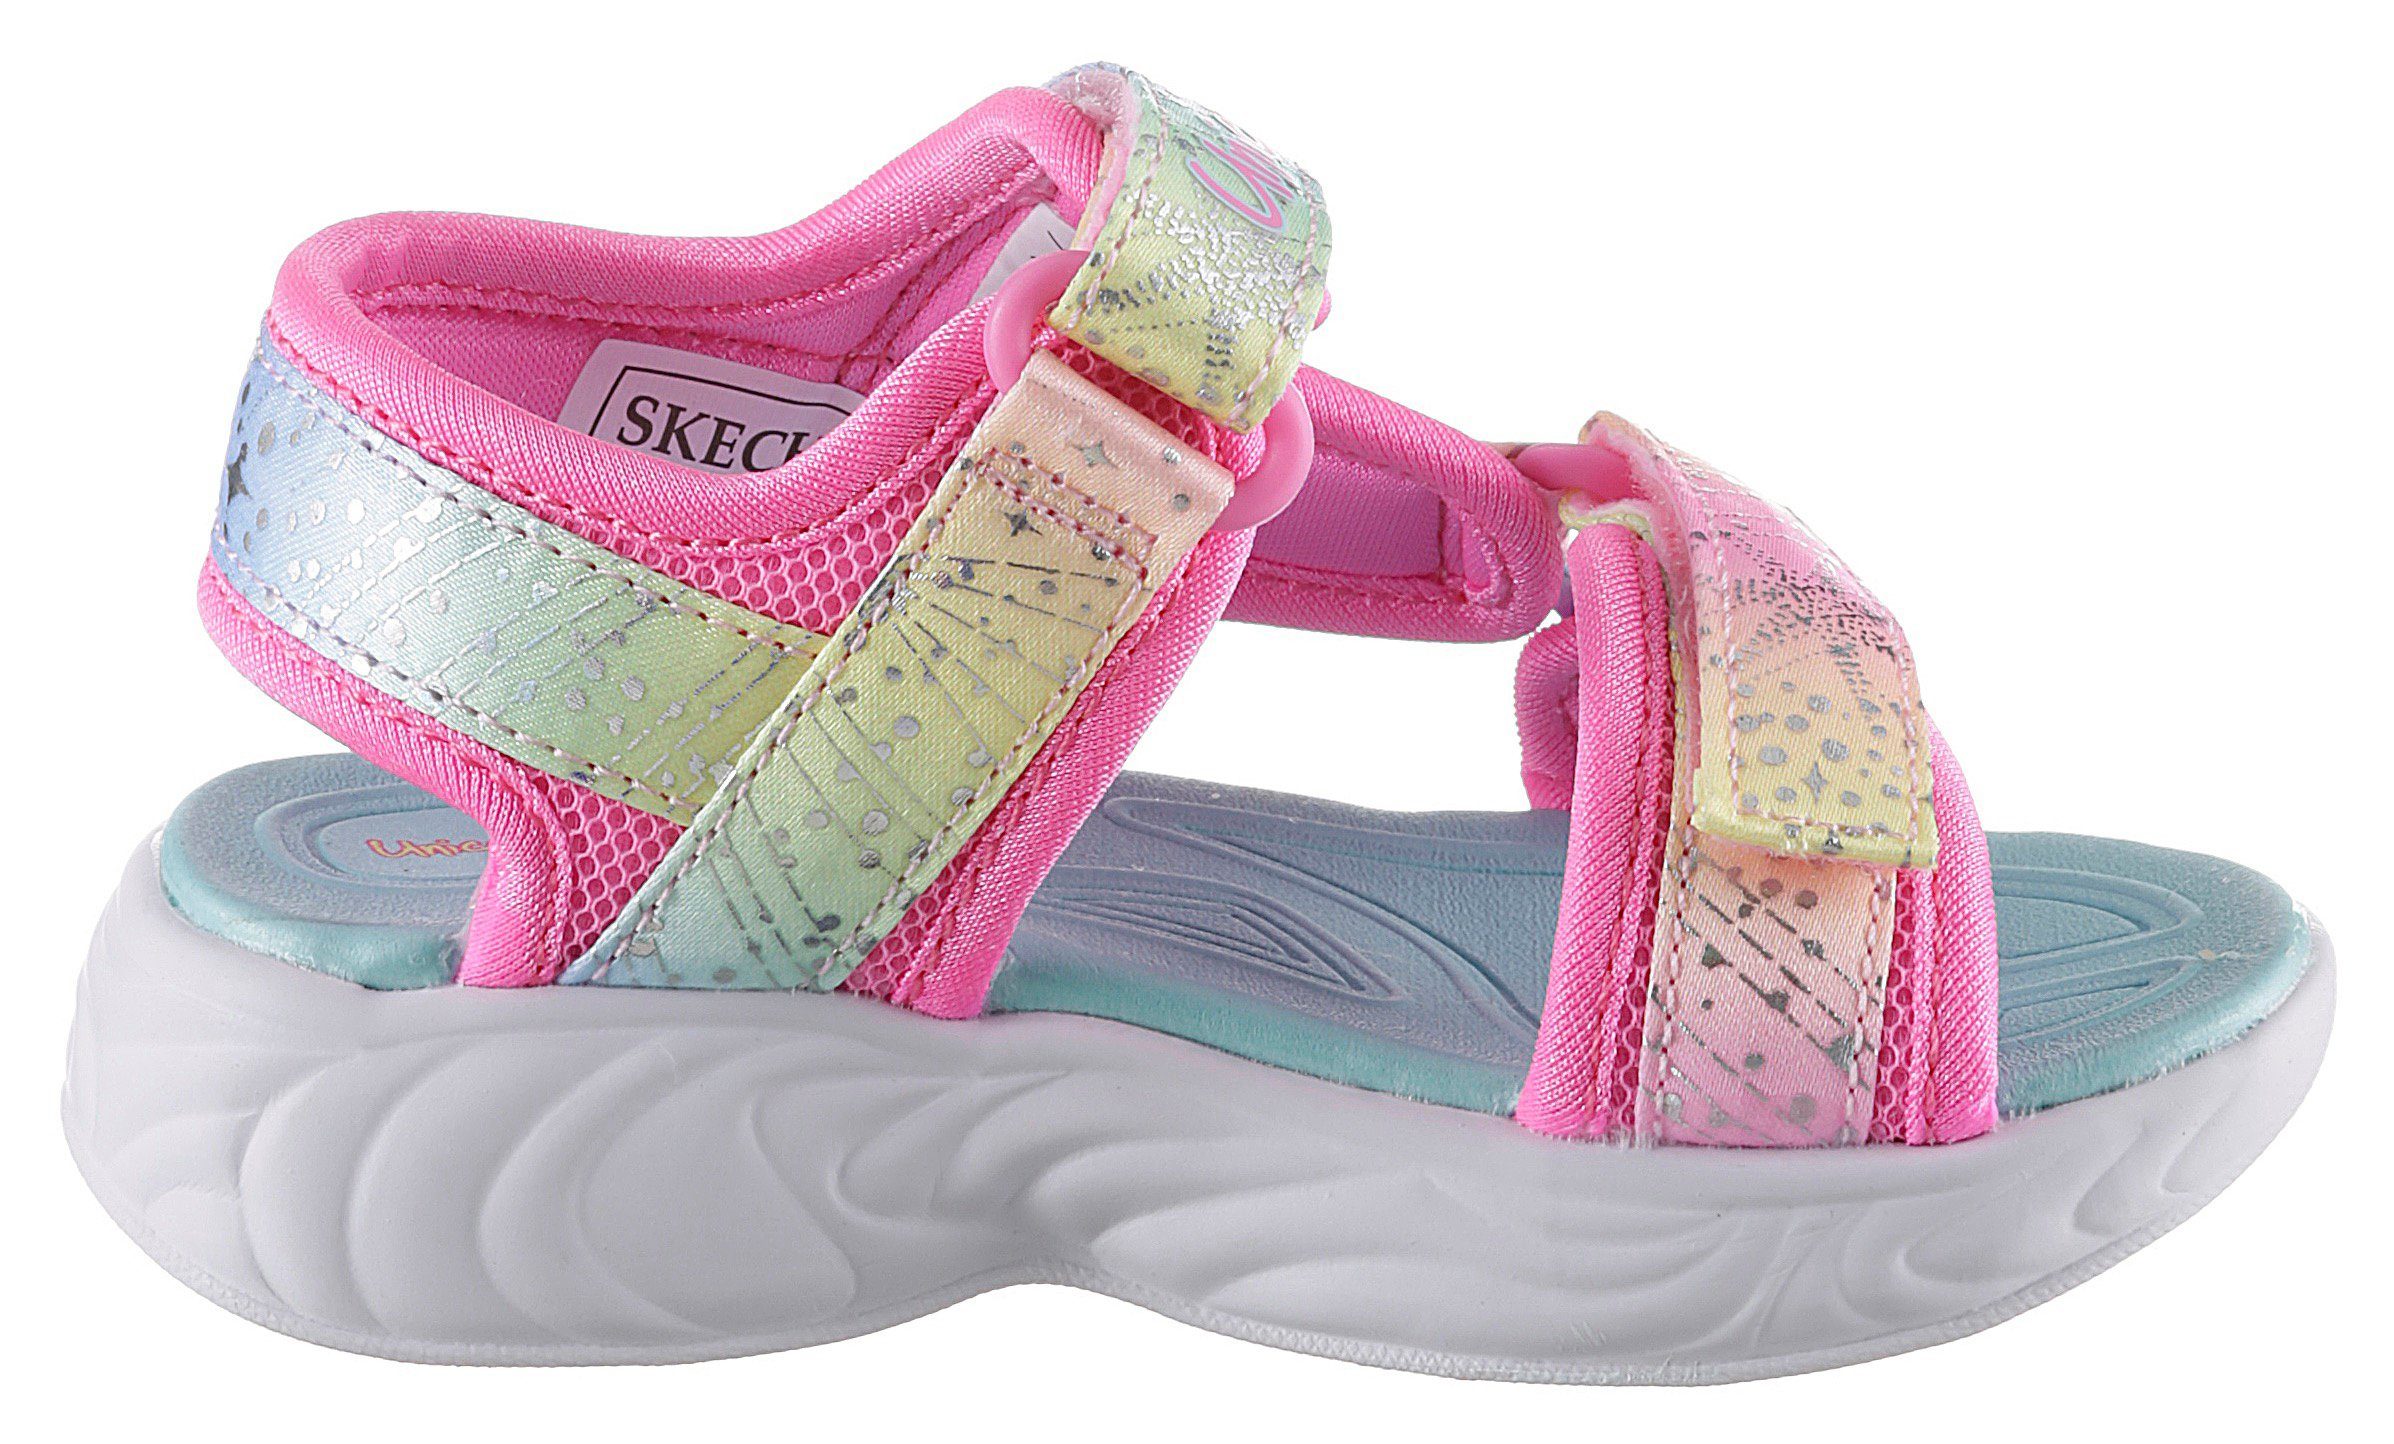 BLISS Skechers Sandale Schritt Kids DREAMS pink-kombiniert MAJESTIC SANDAL bei jedem leuchtet UNICORN